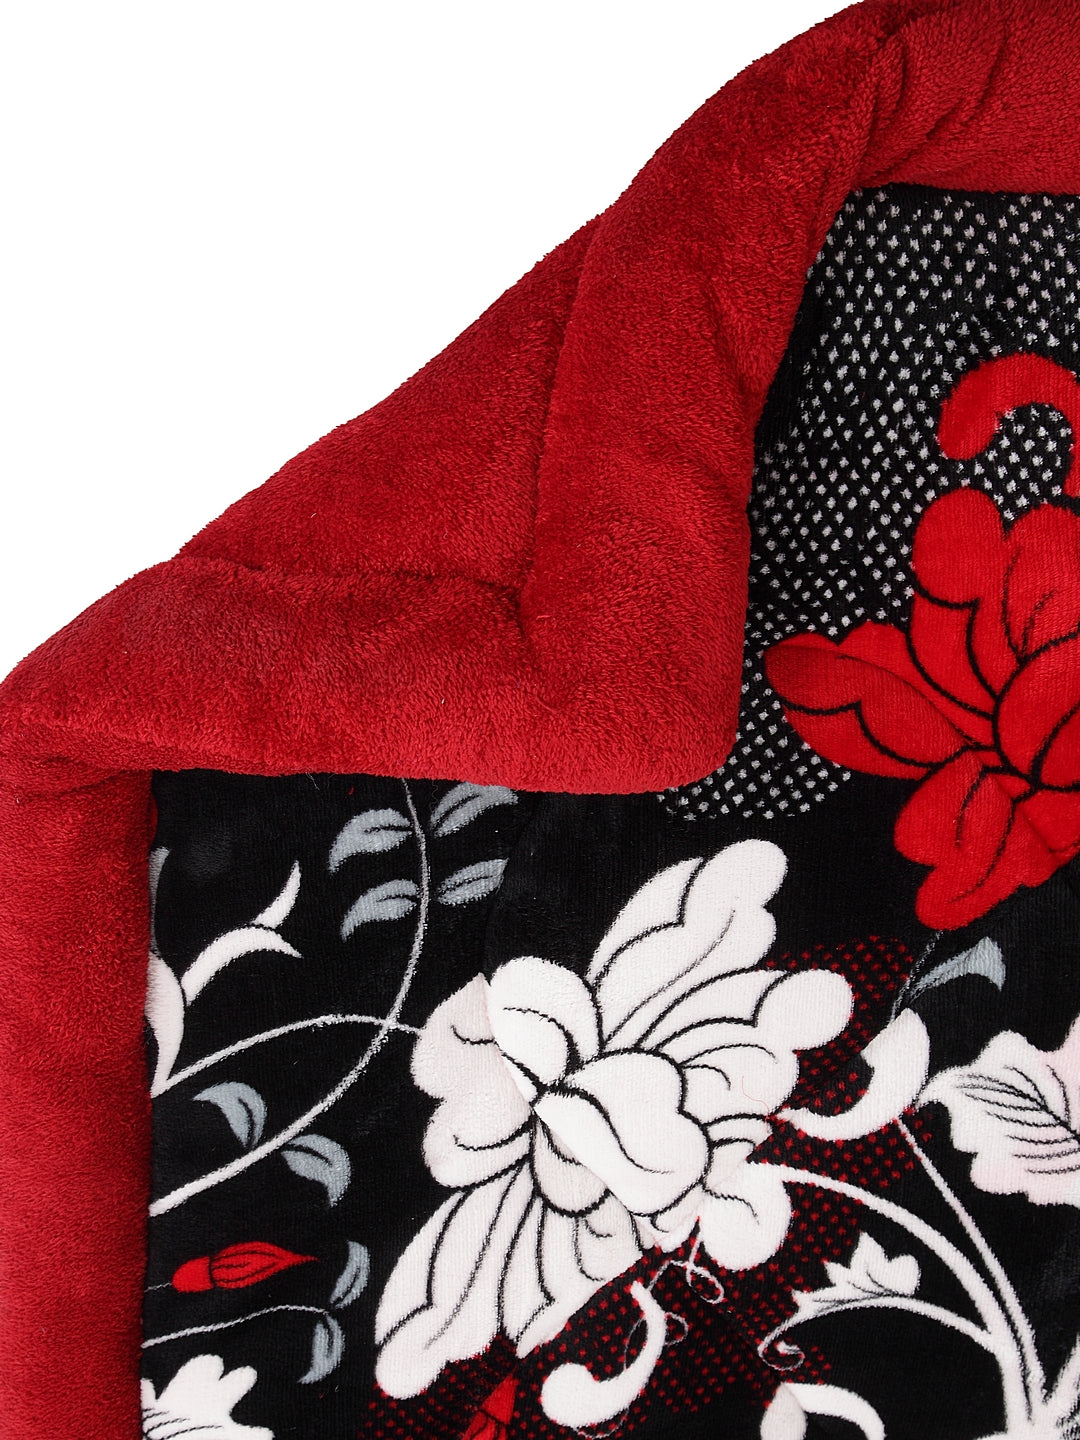 Arrabi Black Floral Polyester King Size 950 GSM Double Quilt (230 X 220 cm)